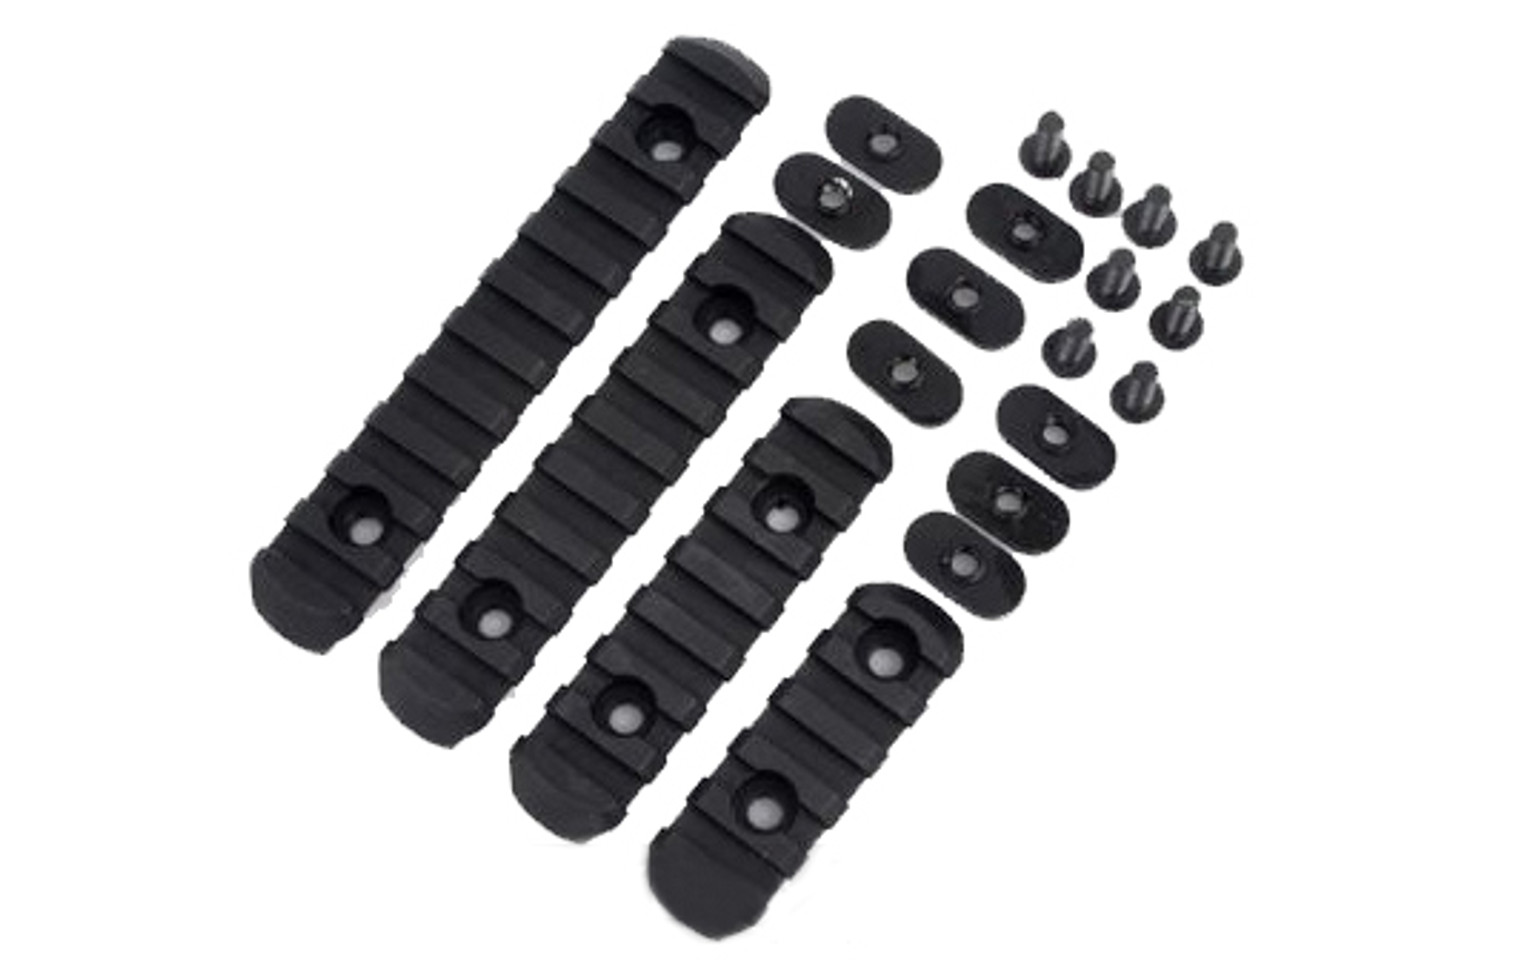 Polymer Rail Set for PTS MOE Hand Guard Series - Black